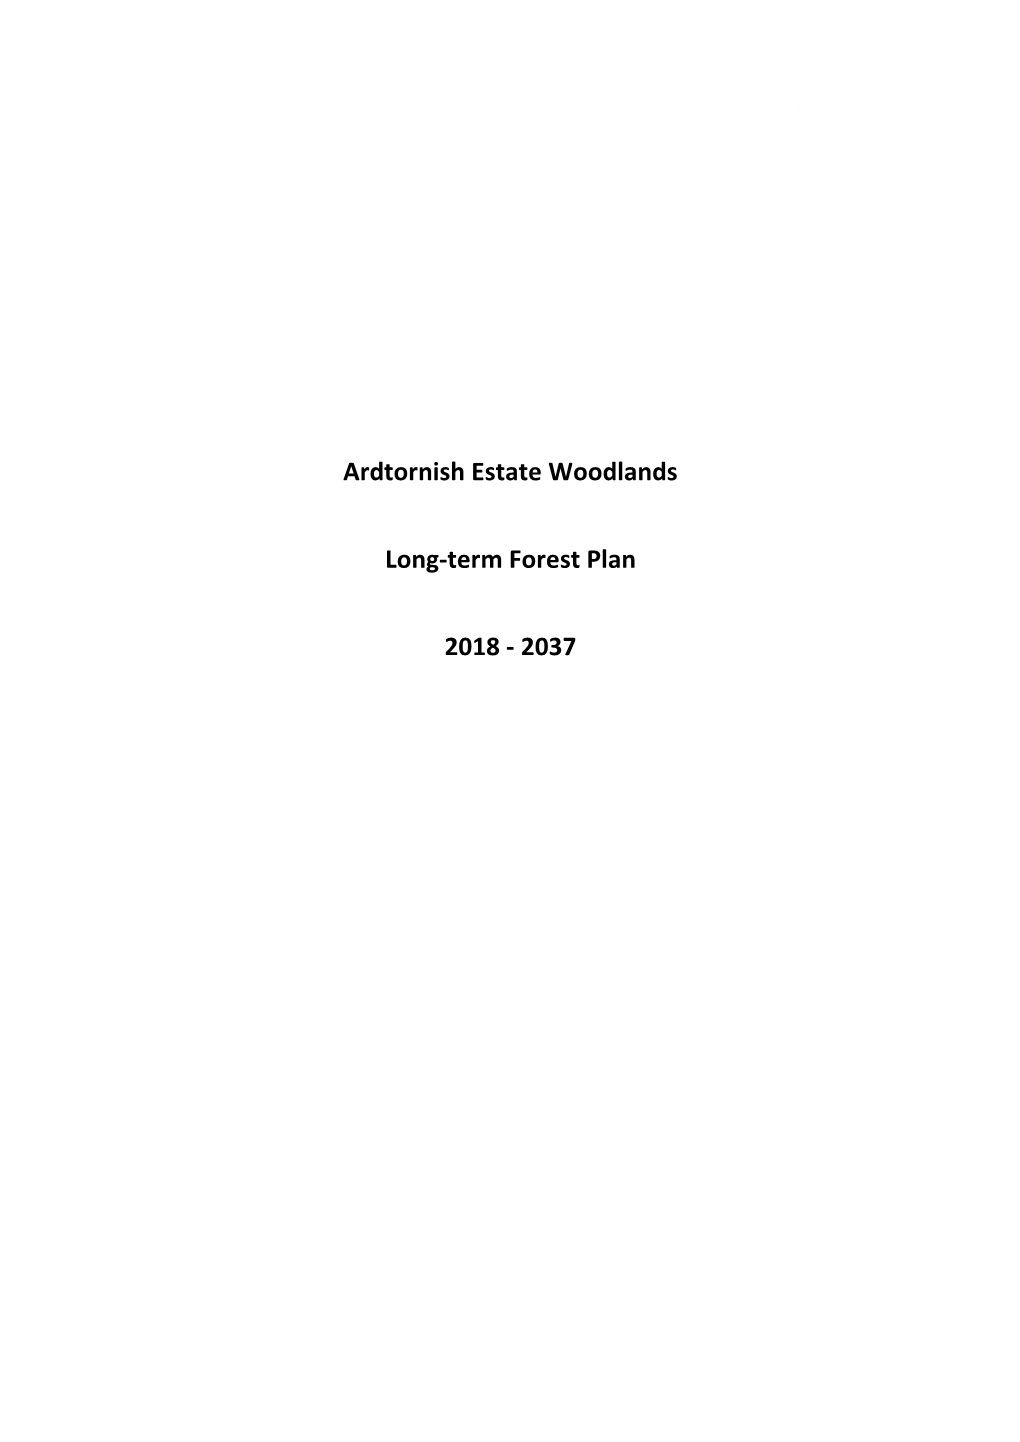 Name of Long Term Forest Plan Ardtornish Estate Woodlands Long